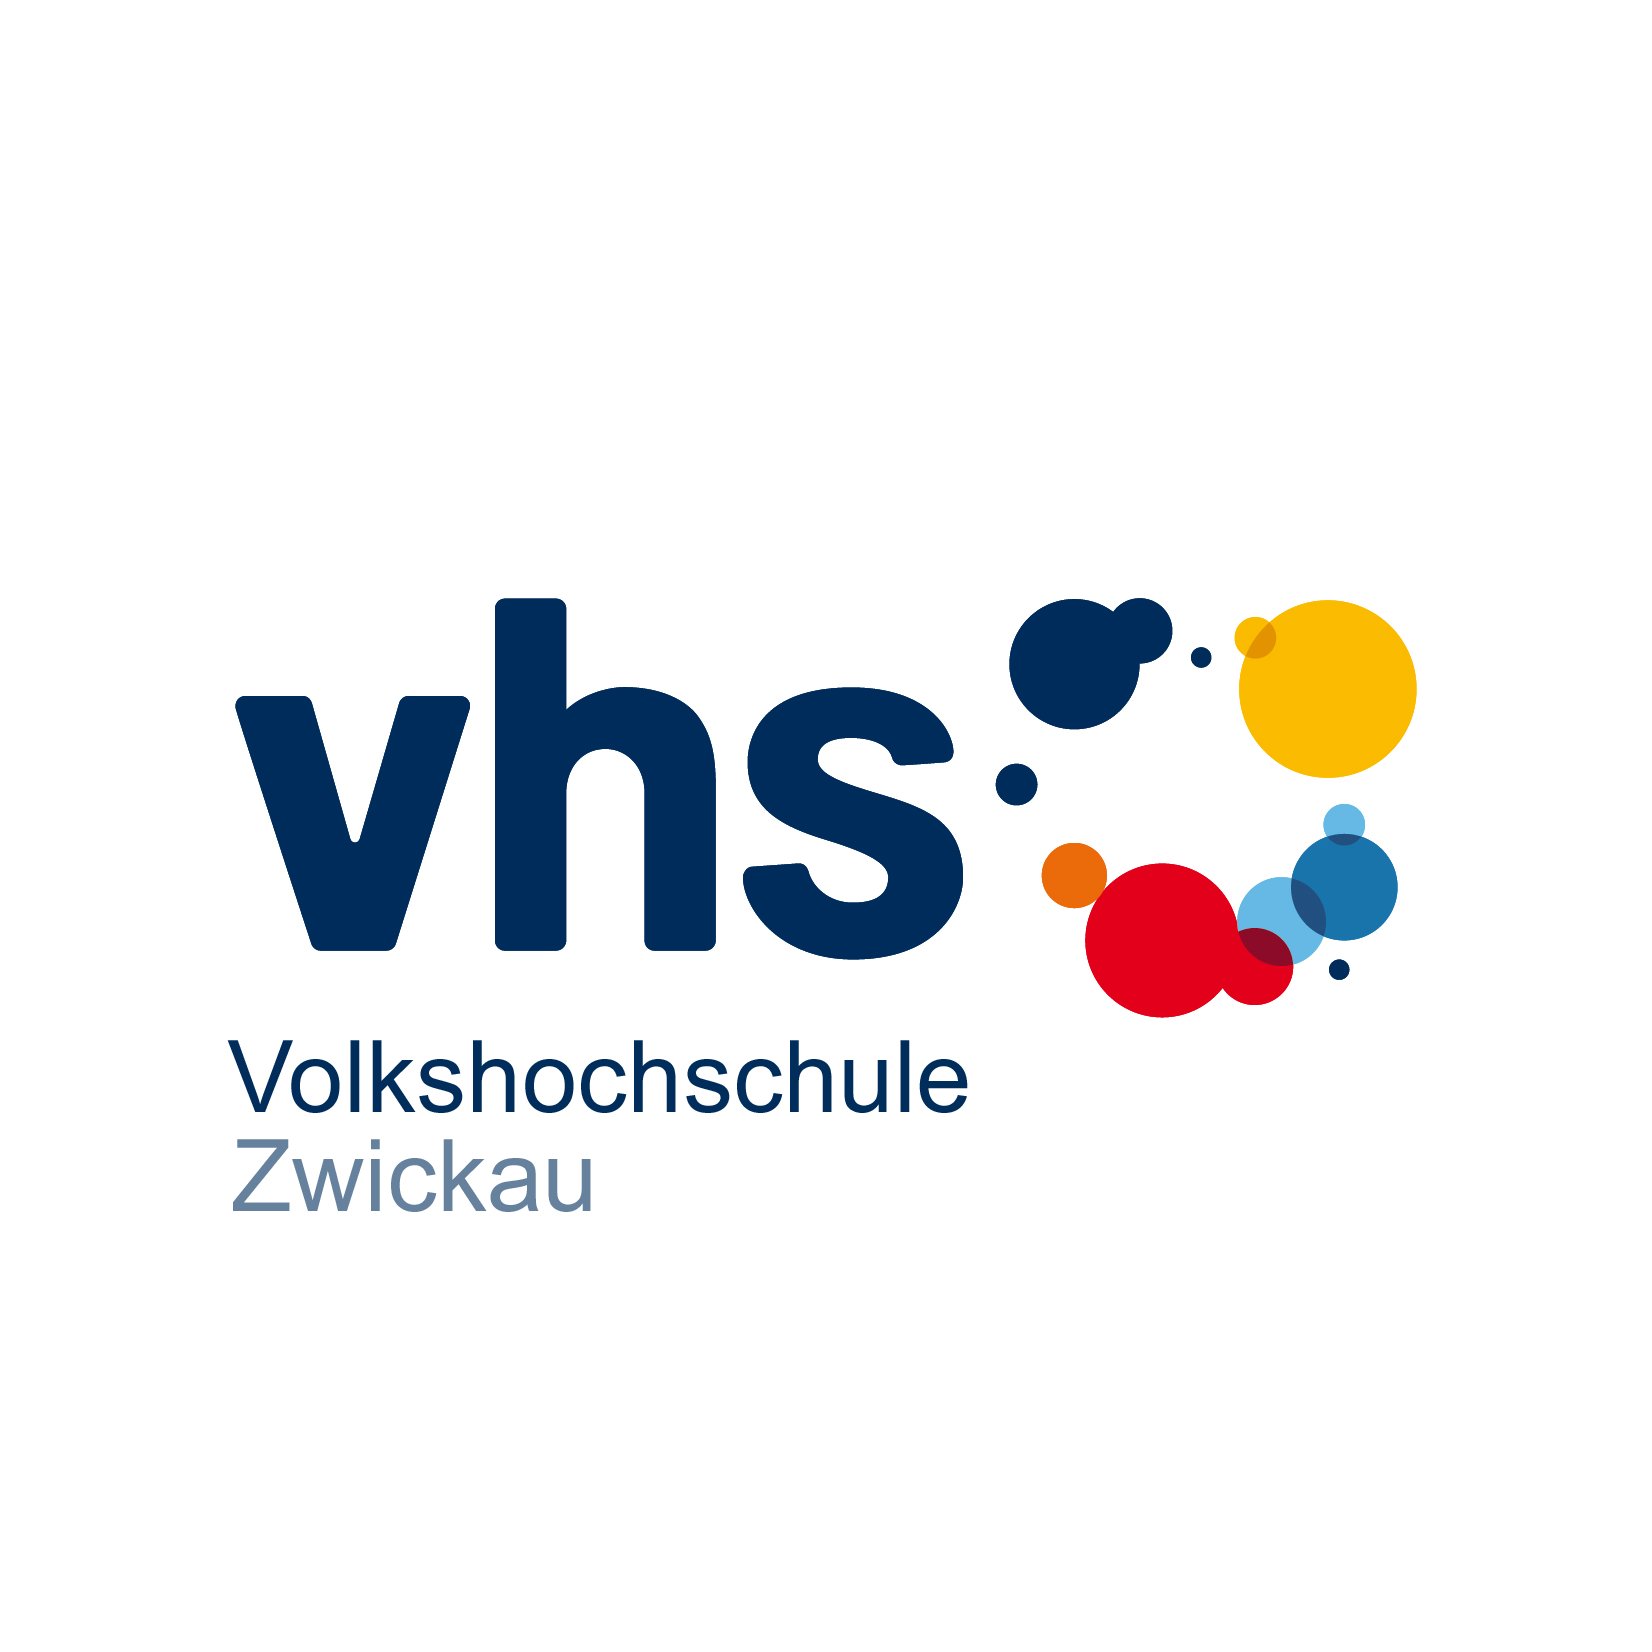 Volkshochschule Zwickau in Zwickau - Logo